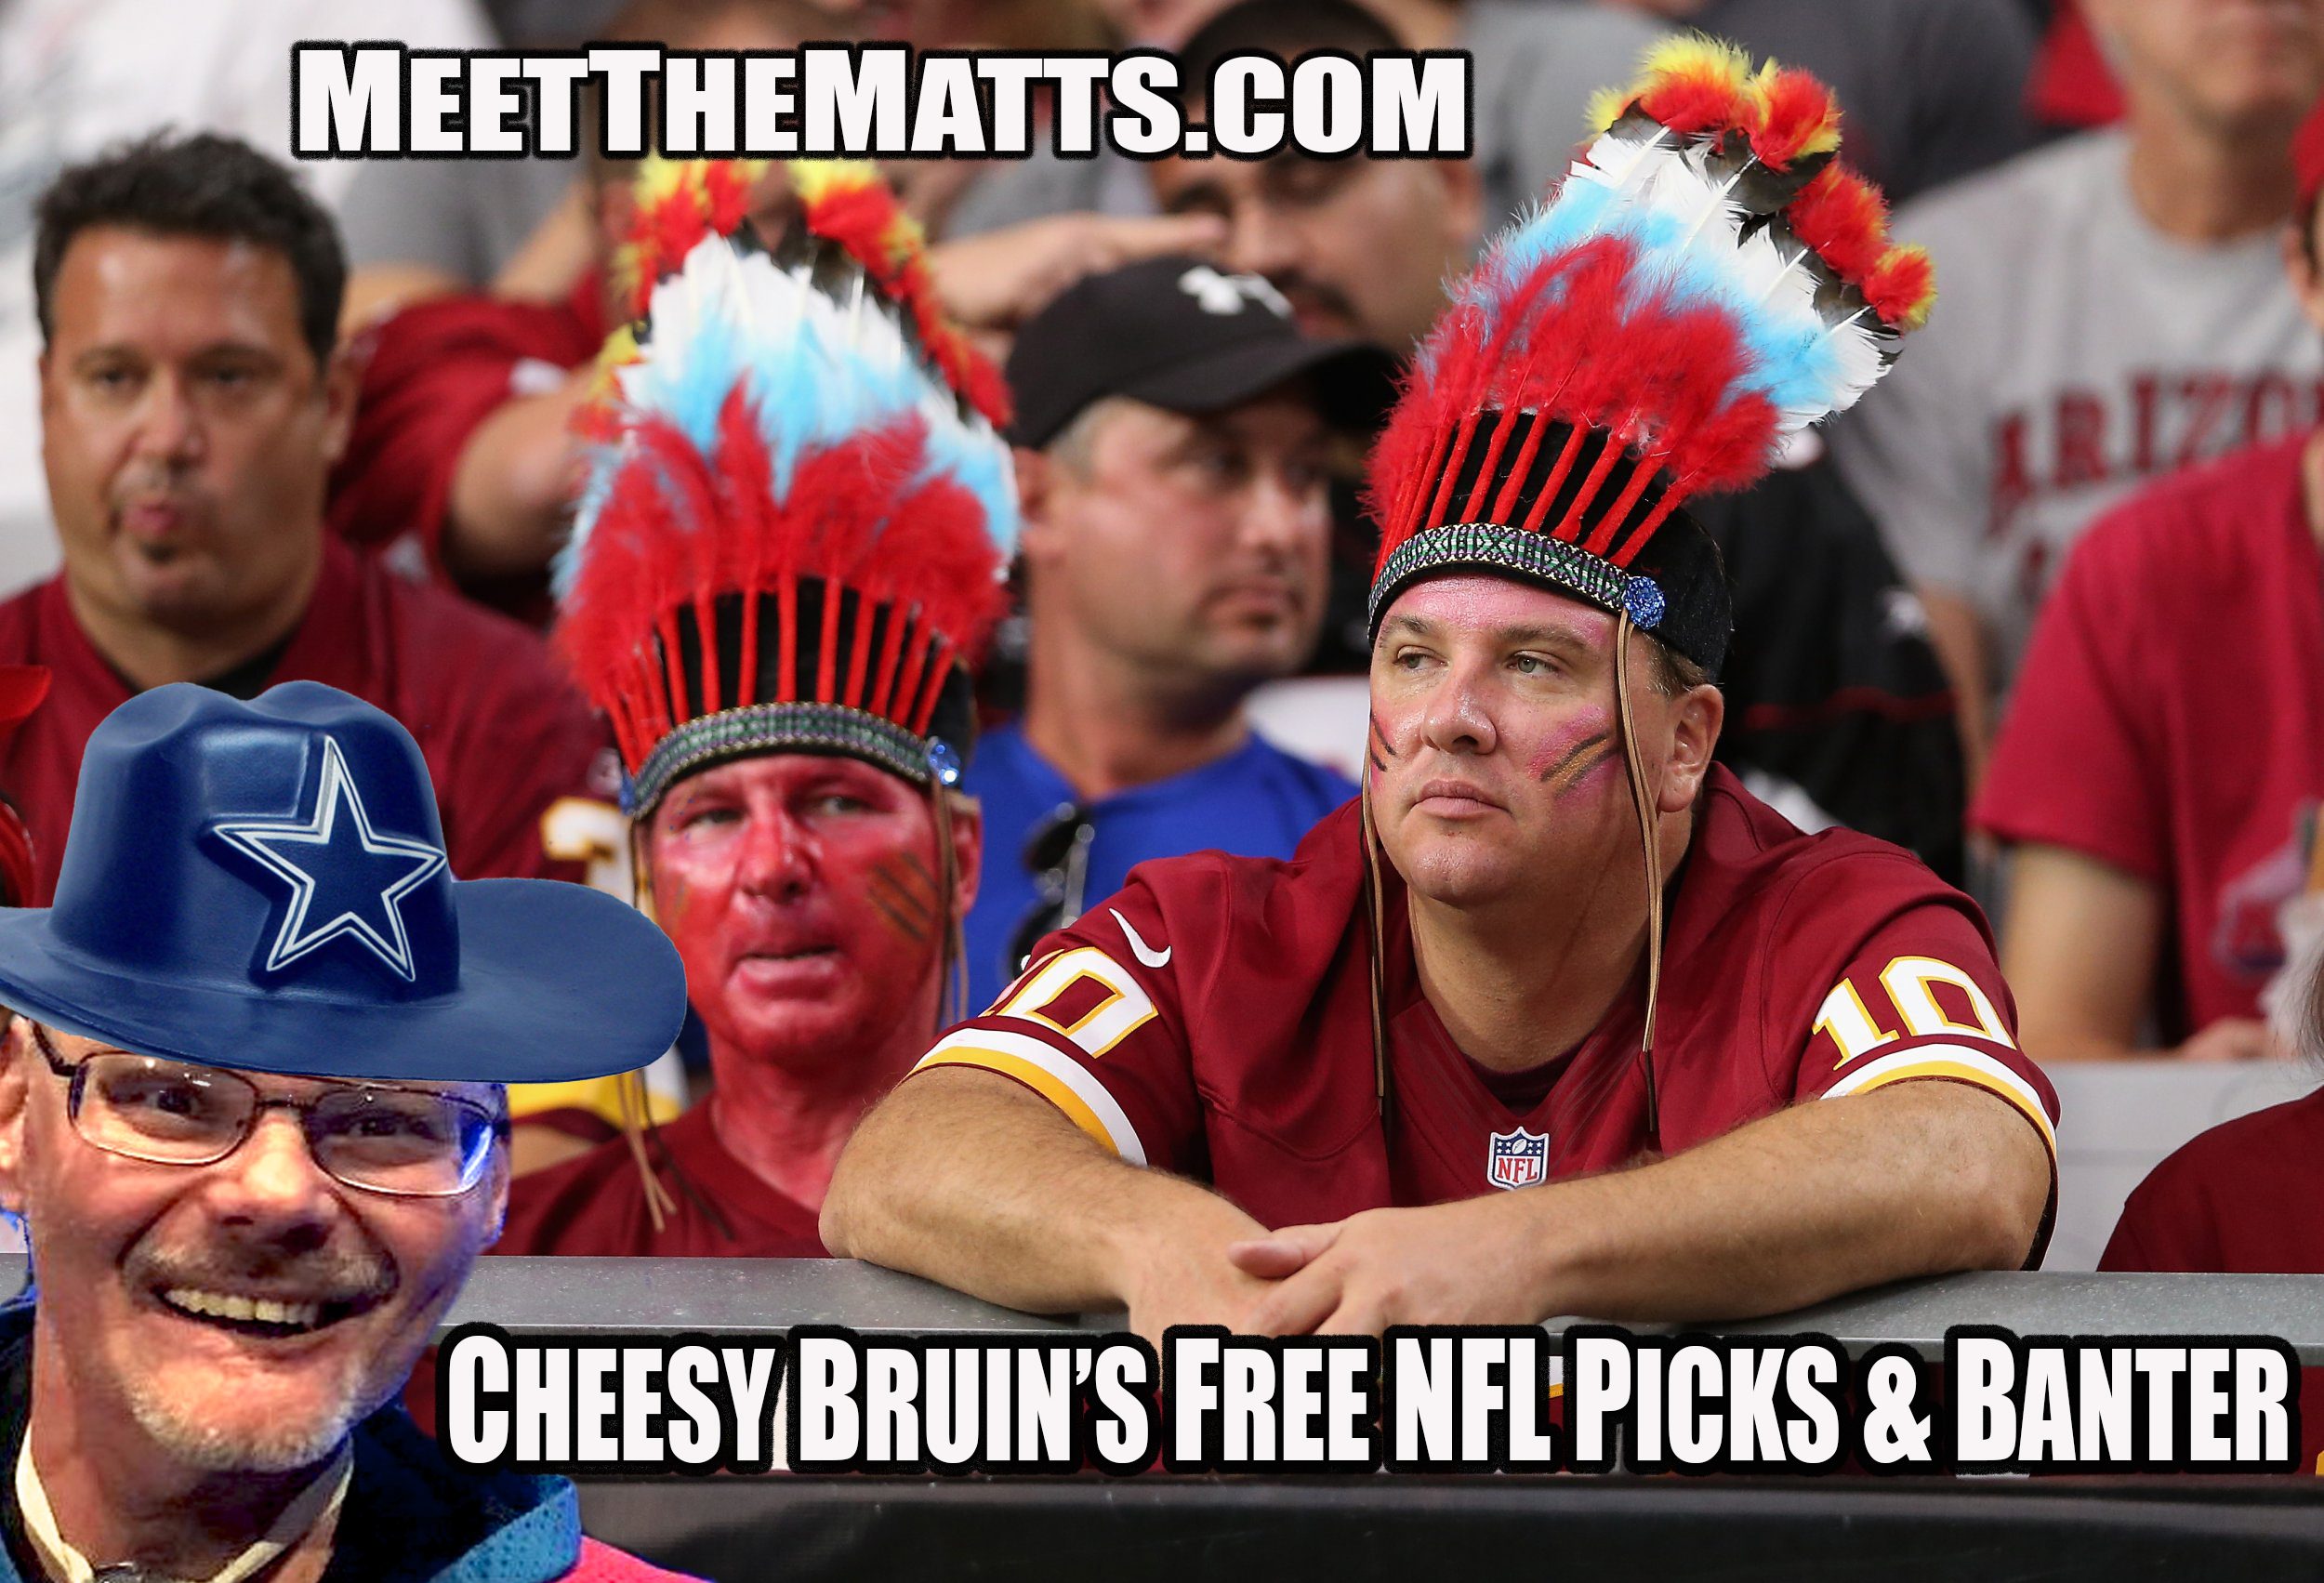 Cheesy_Bruin, Rich_Perlongo, Meet_The_Matts, FREE_NFL_PICKS, Cowboys, Redskins, Sam_Darnold,skins-fans